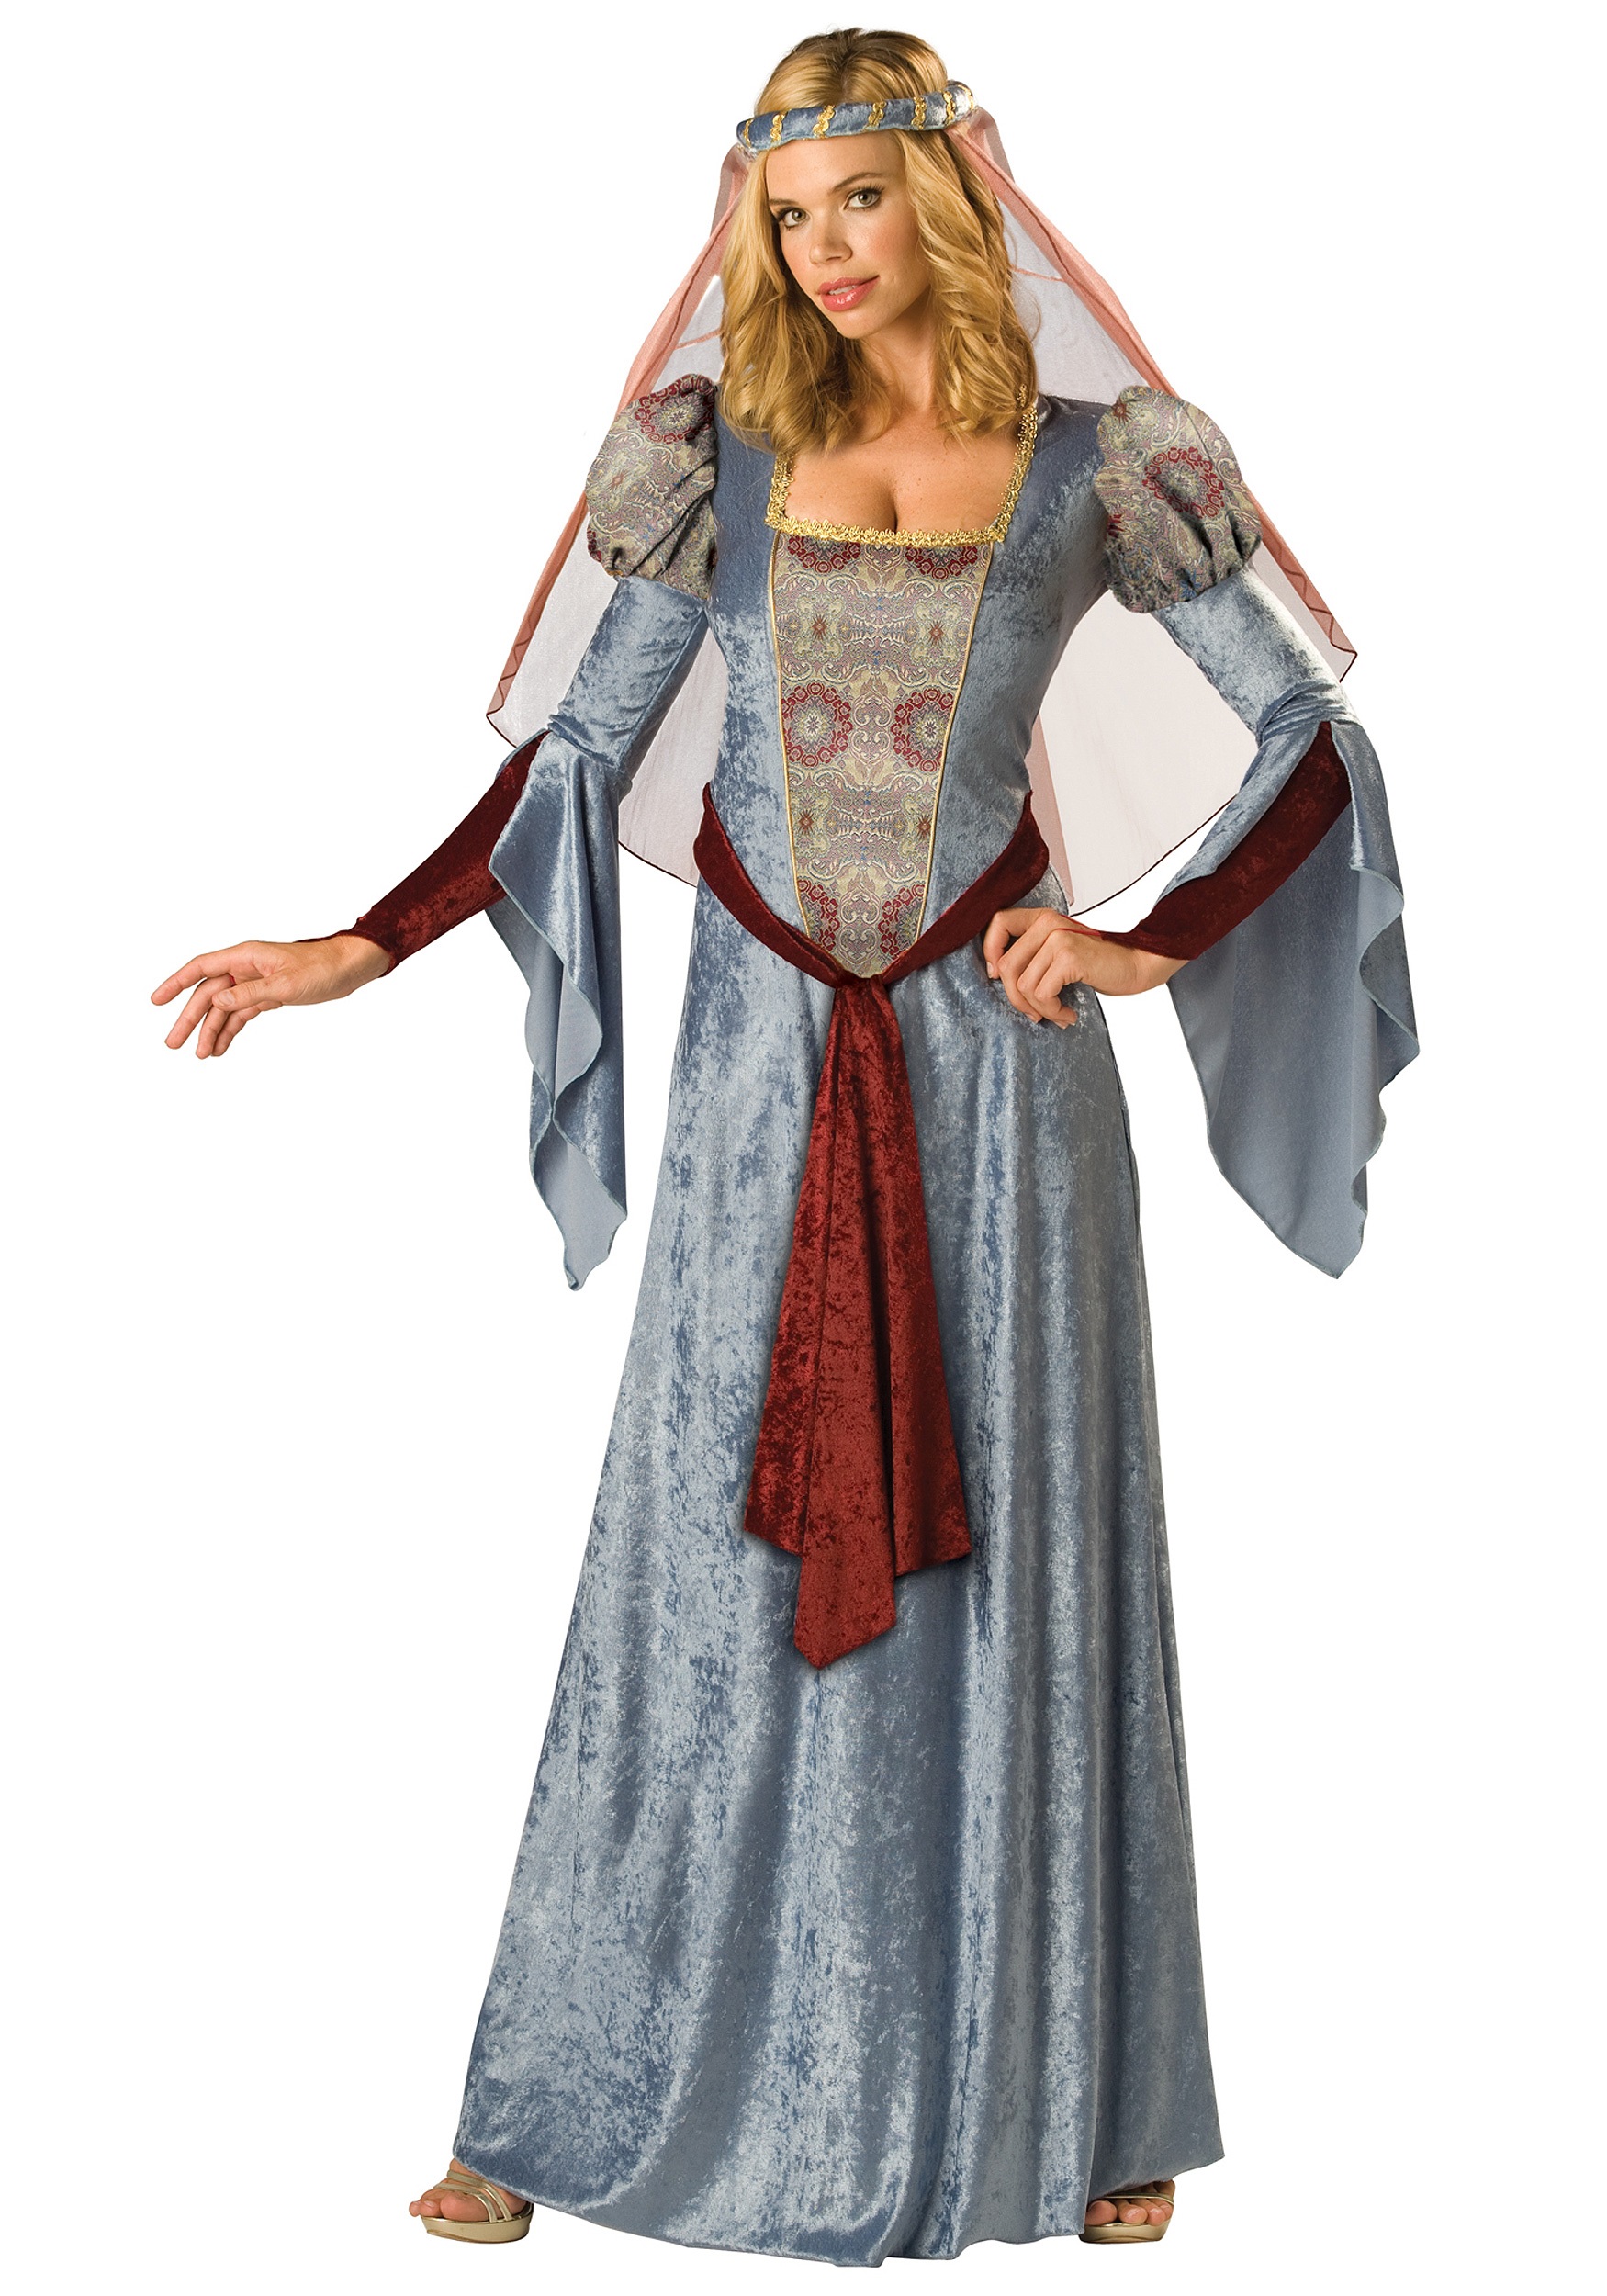 Enchanted Renaissance Costume